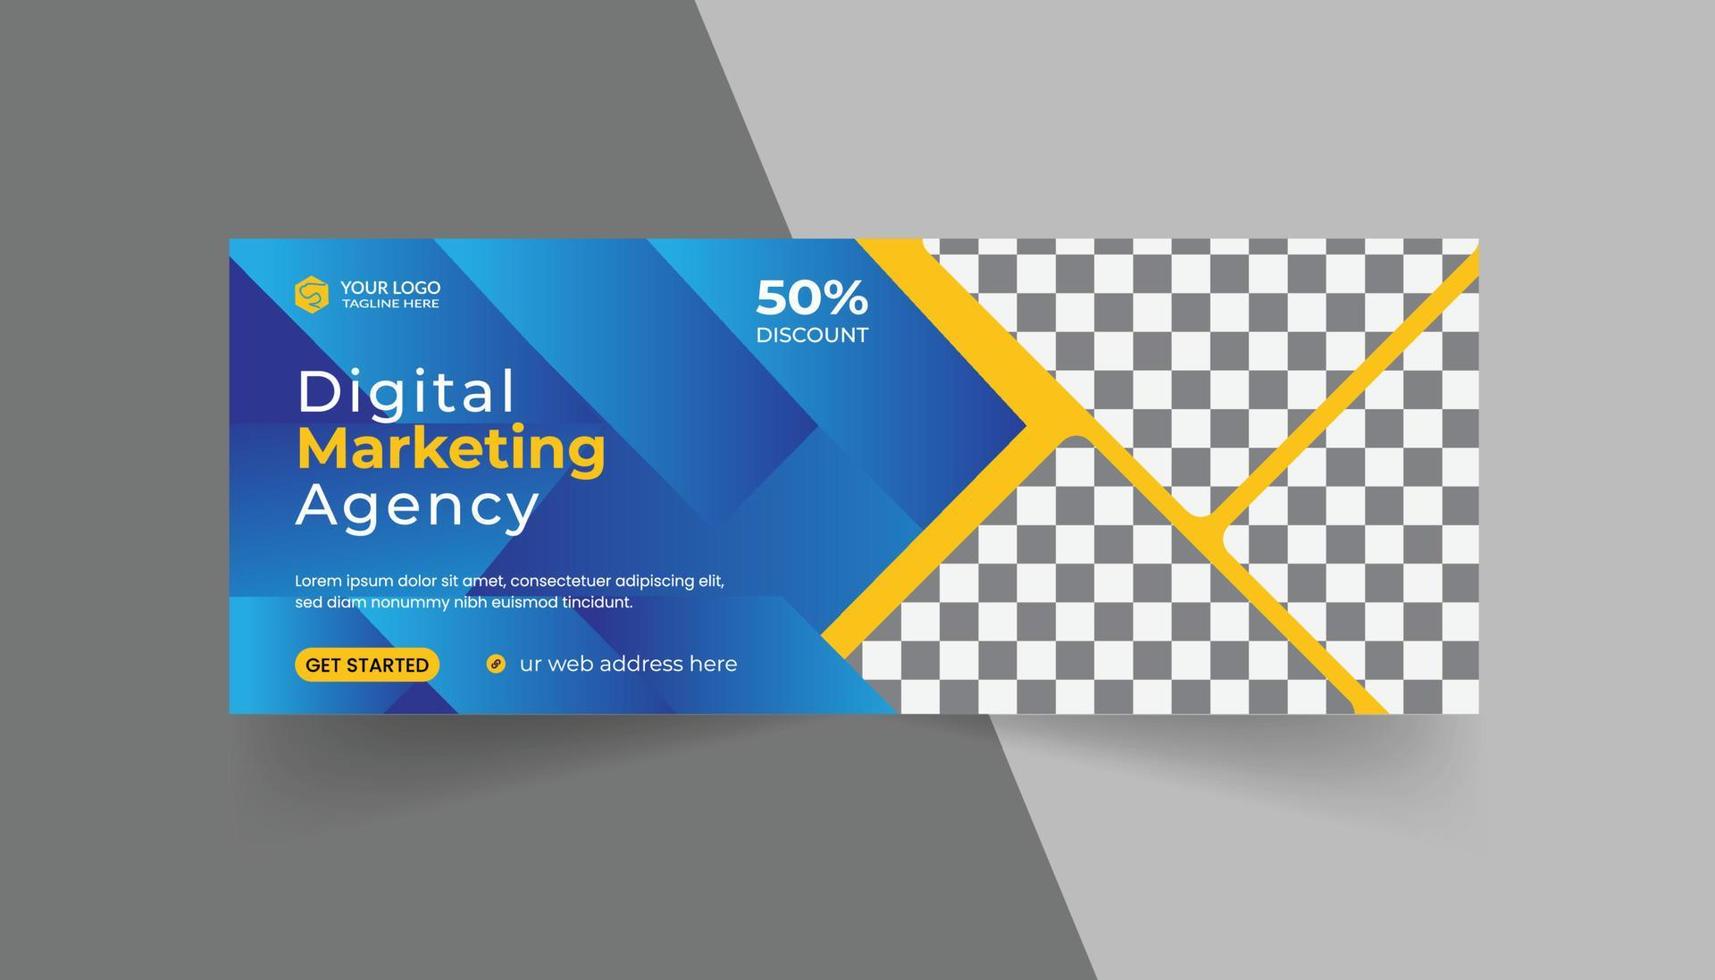 digitale Marketingagentur Social Media Cover Template Design vektor